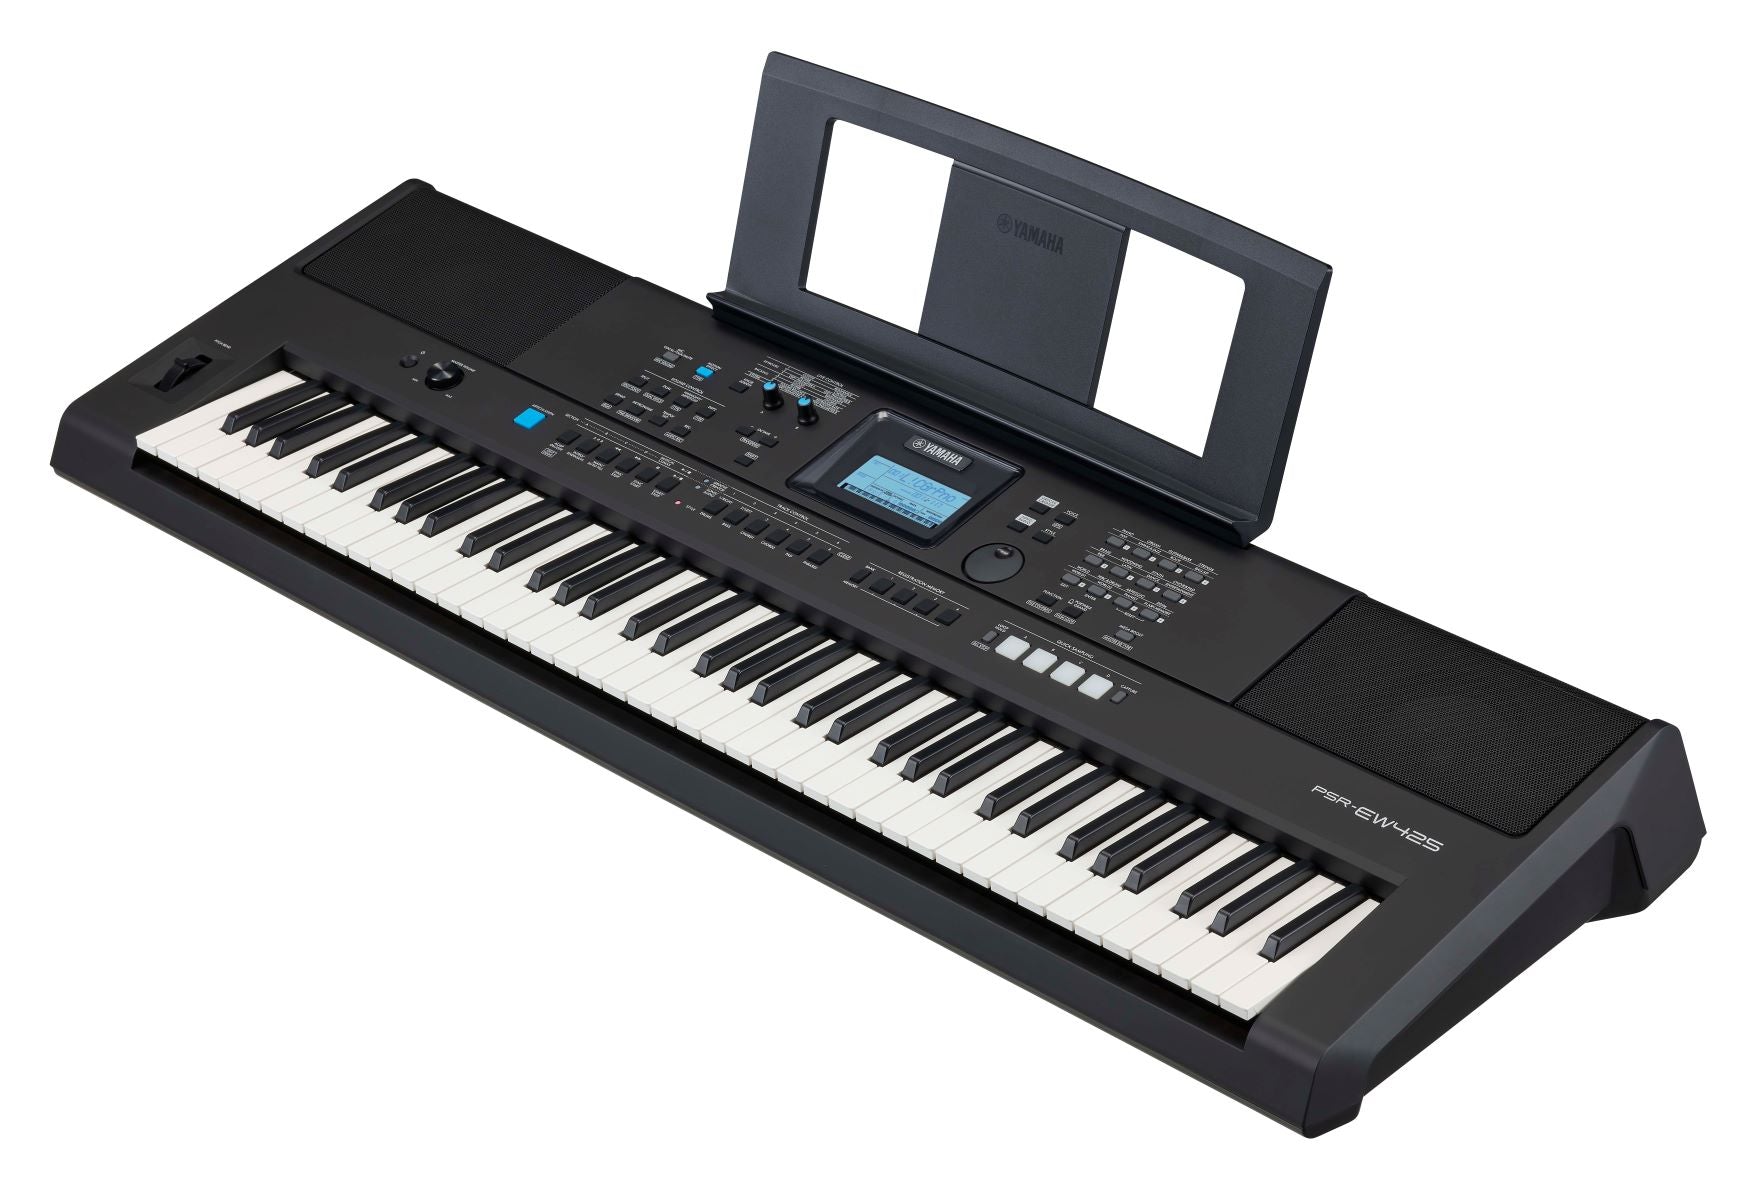 Yamaha PSRE-W425 touch-sensitive keyboard